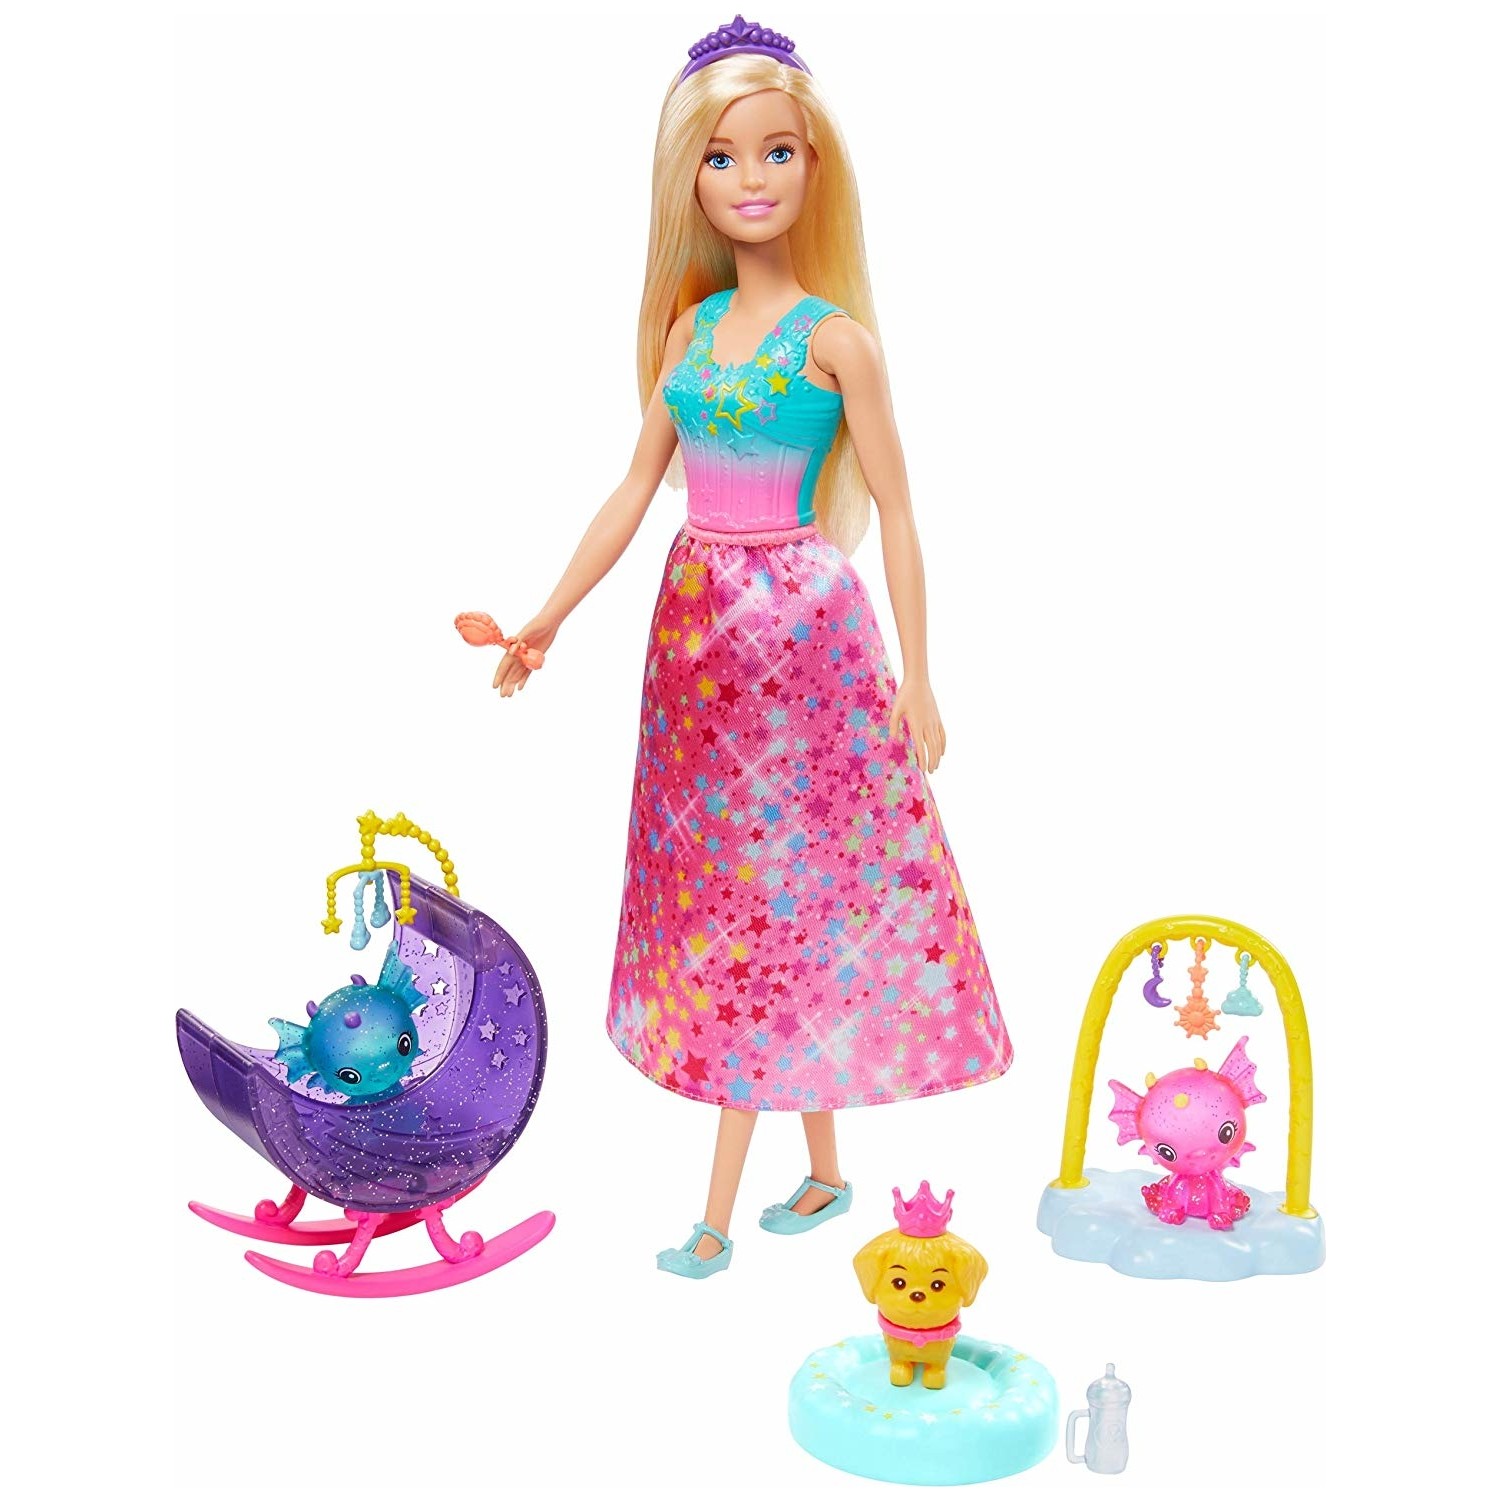 Кукла Barbie Dreamtopia Princess Doll and Accessories GJK51 кукла barbie dreamtopia rainbow latiin princess